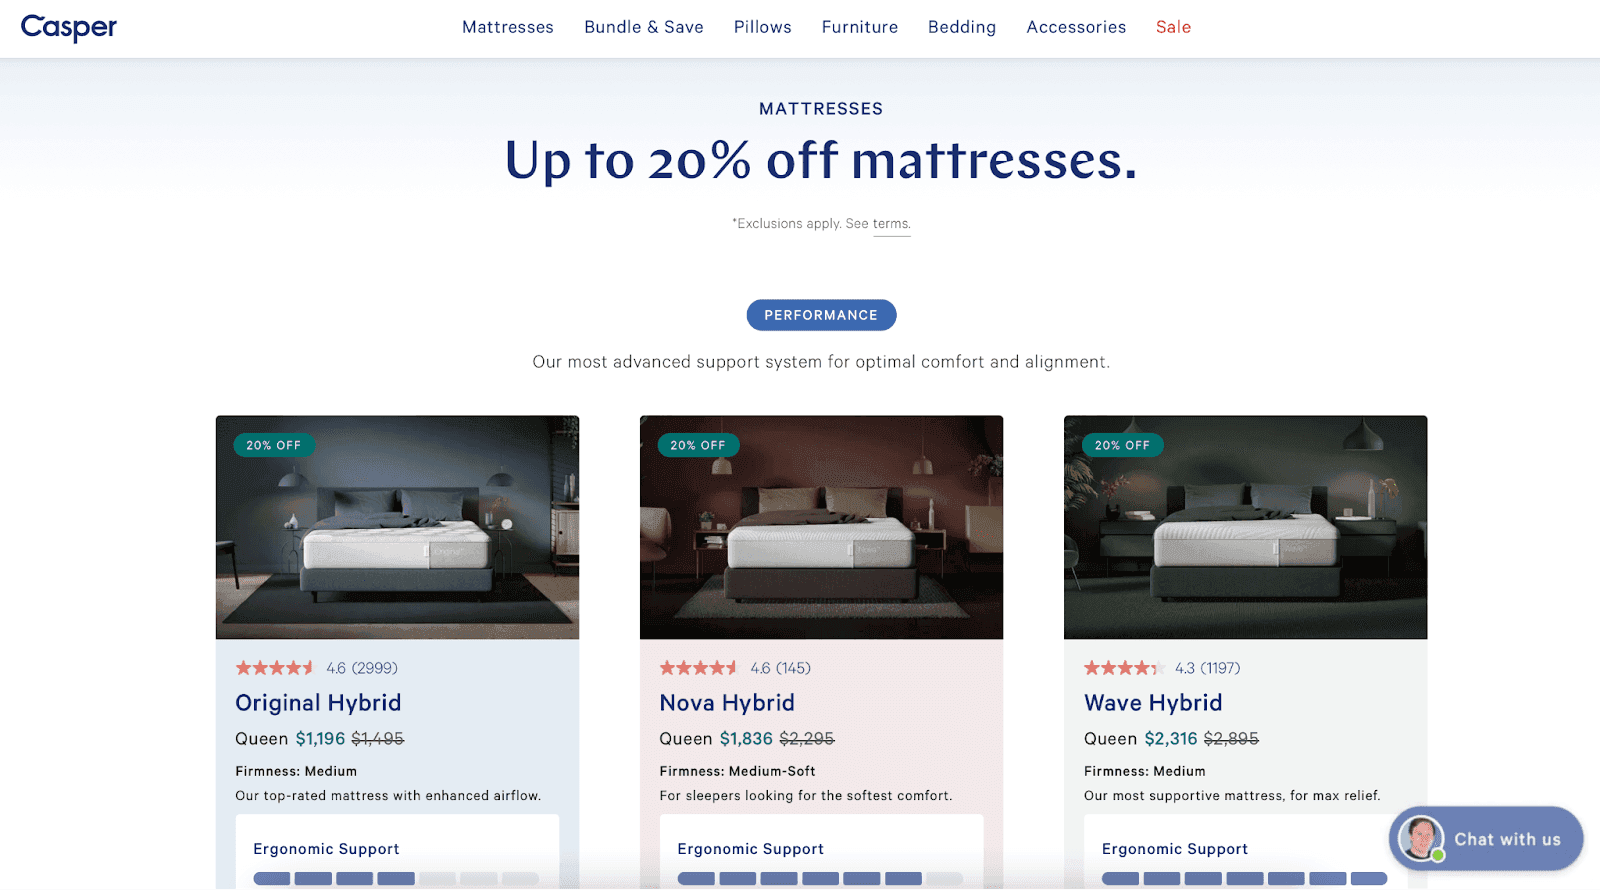 Casper mattresses - Up to 20% off mattresses